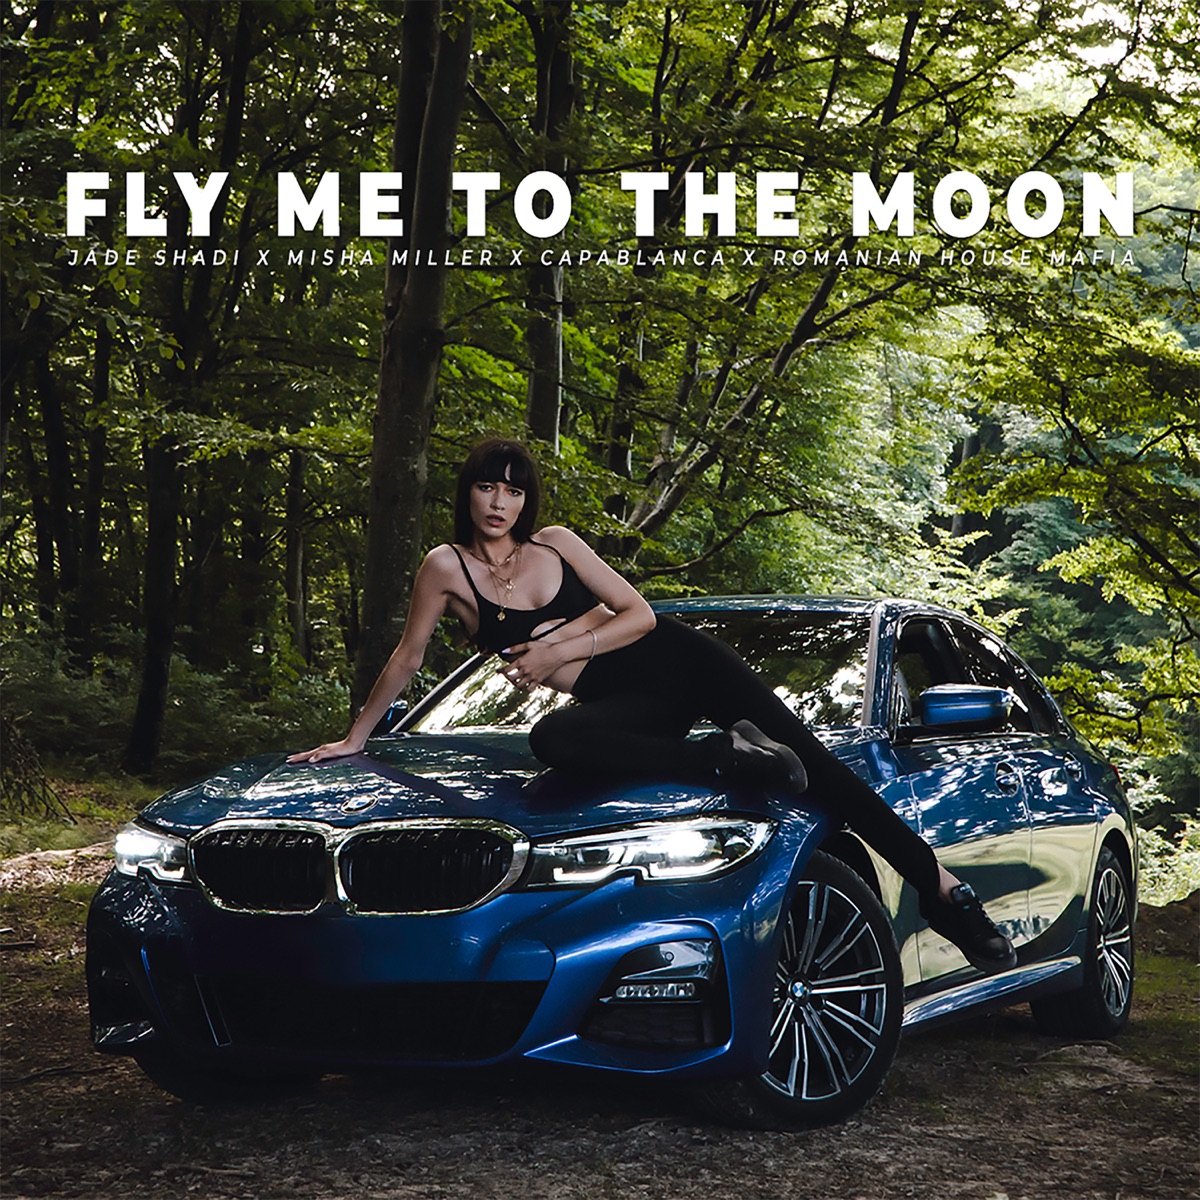 Jade Shadi, Misha Miller, Capablanca, & Romanian House Mafia — Fly Me To The Moon cover artwork